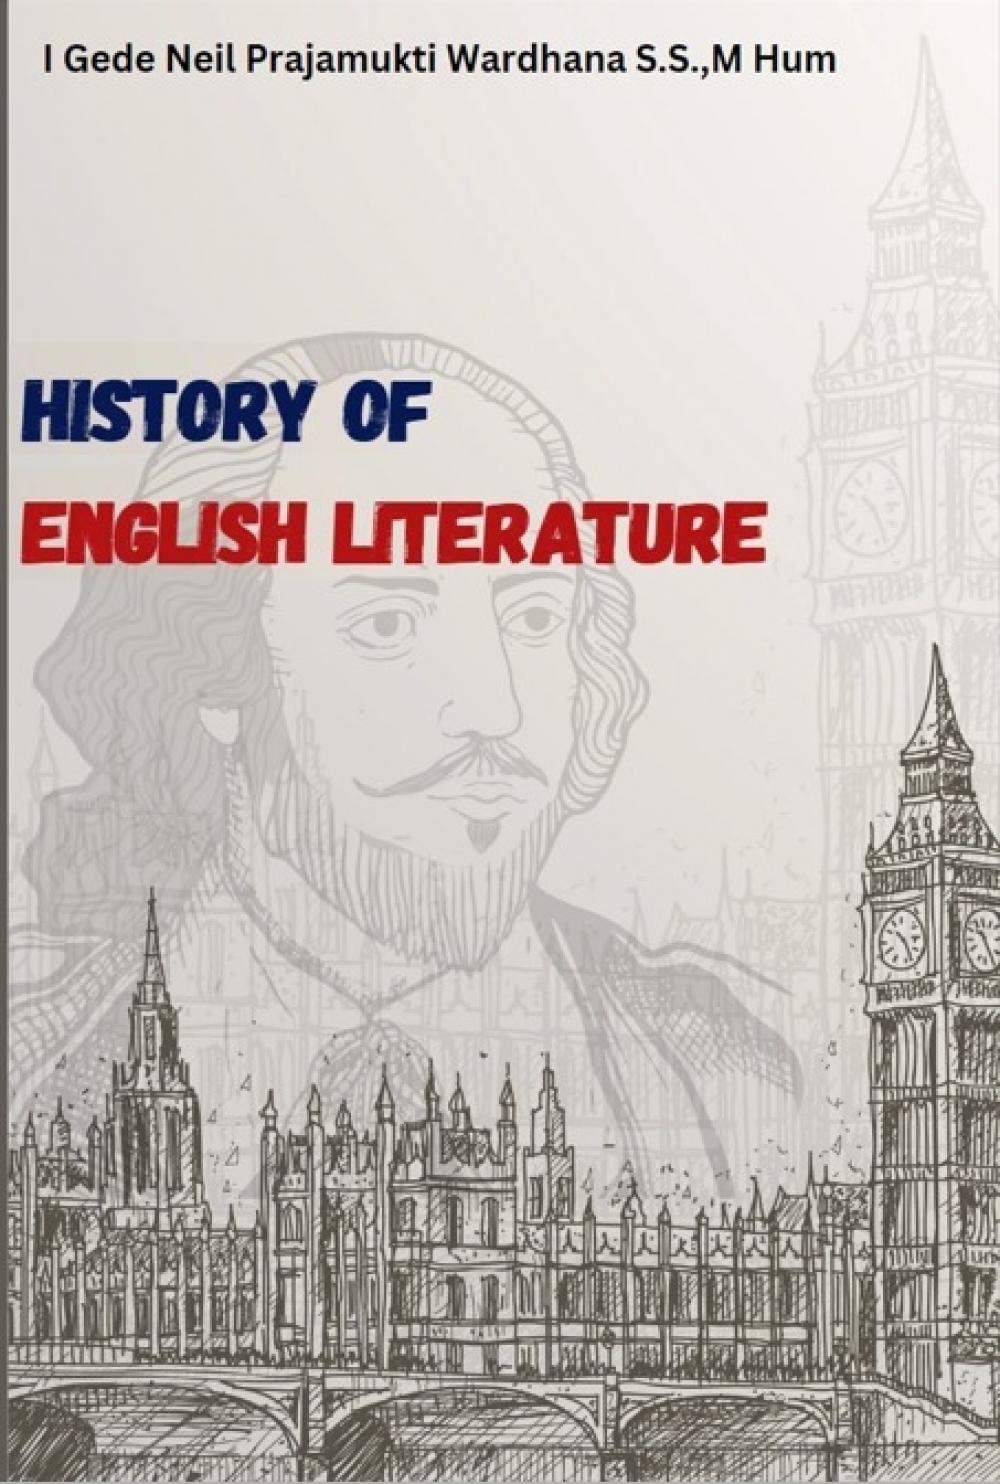 HISTORY OF ENGLISH LITERATURE